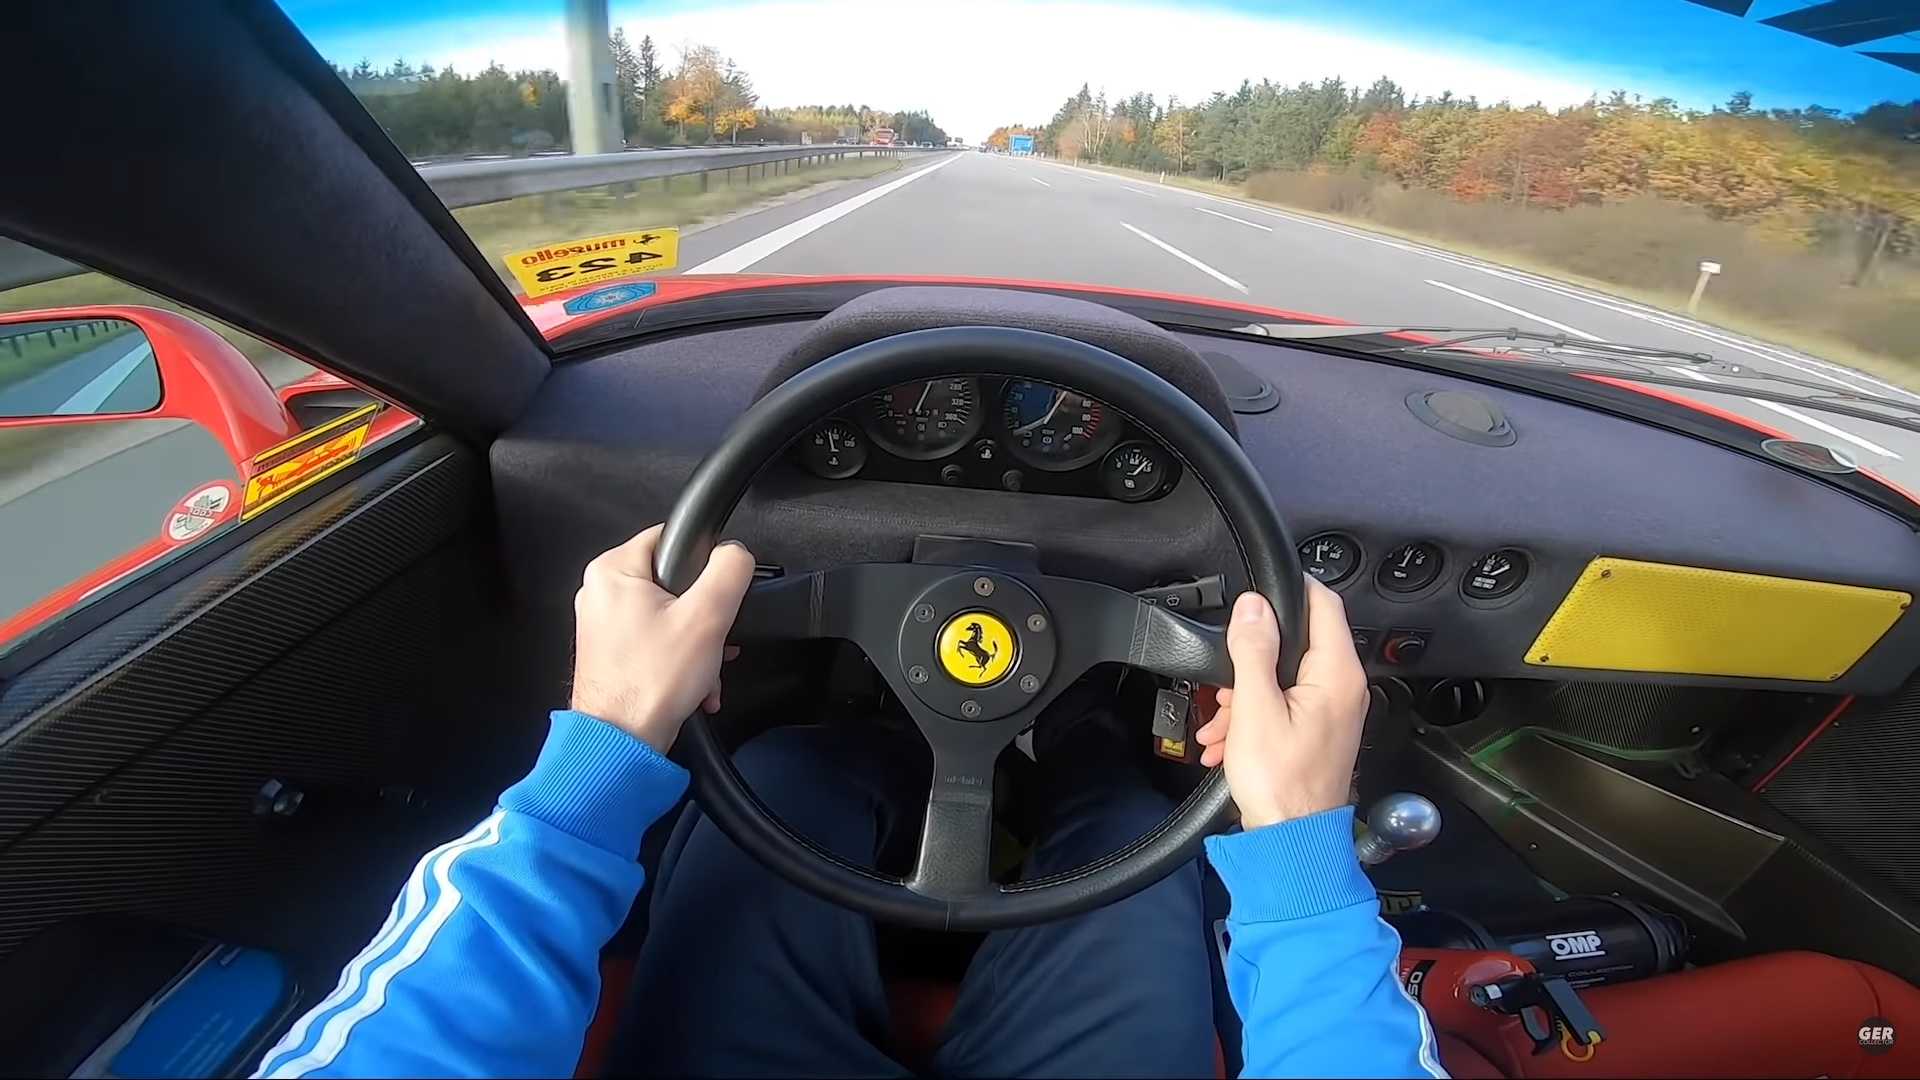 Straight-Piped Ferrari F40 Sounds Glorious At Full Tilt On Autobahn